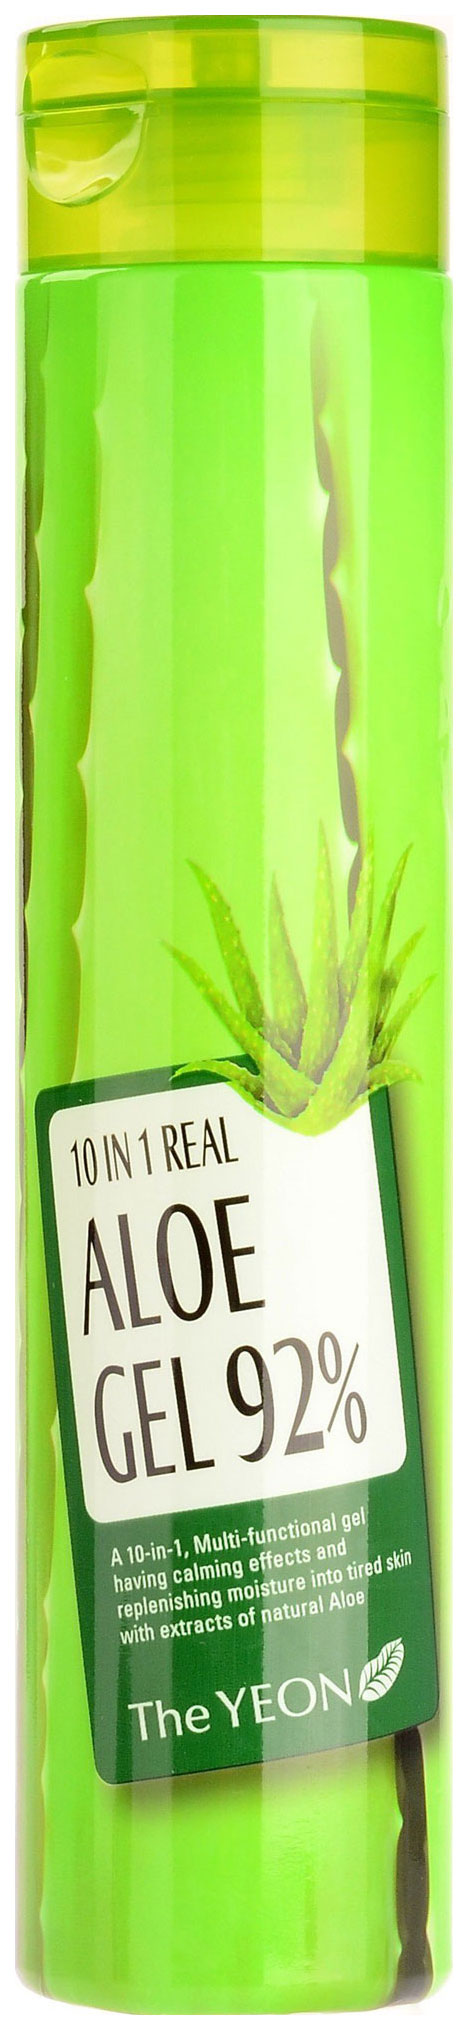 Средство для тела The Yeon 10 in 1 Real Aloe Gel 92% 300 мл